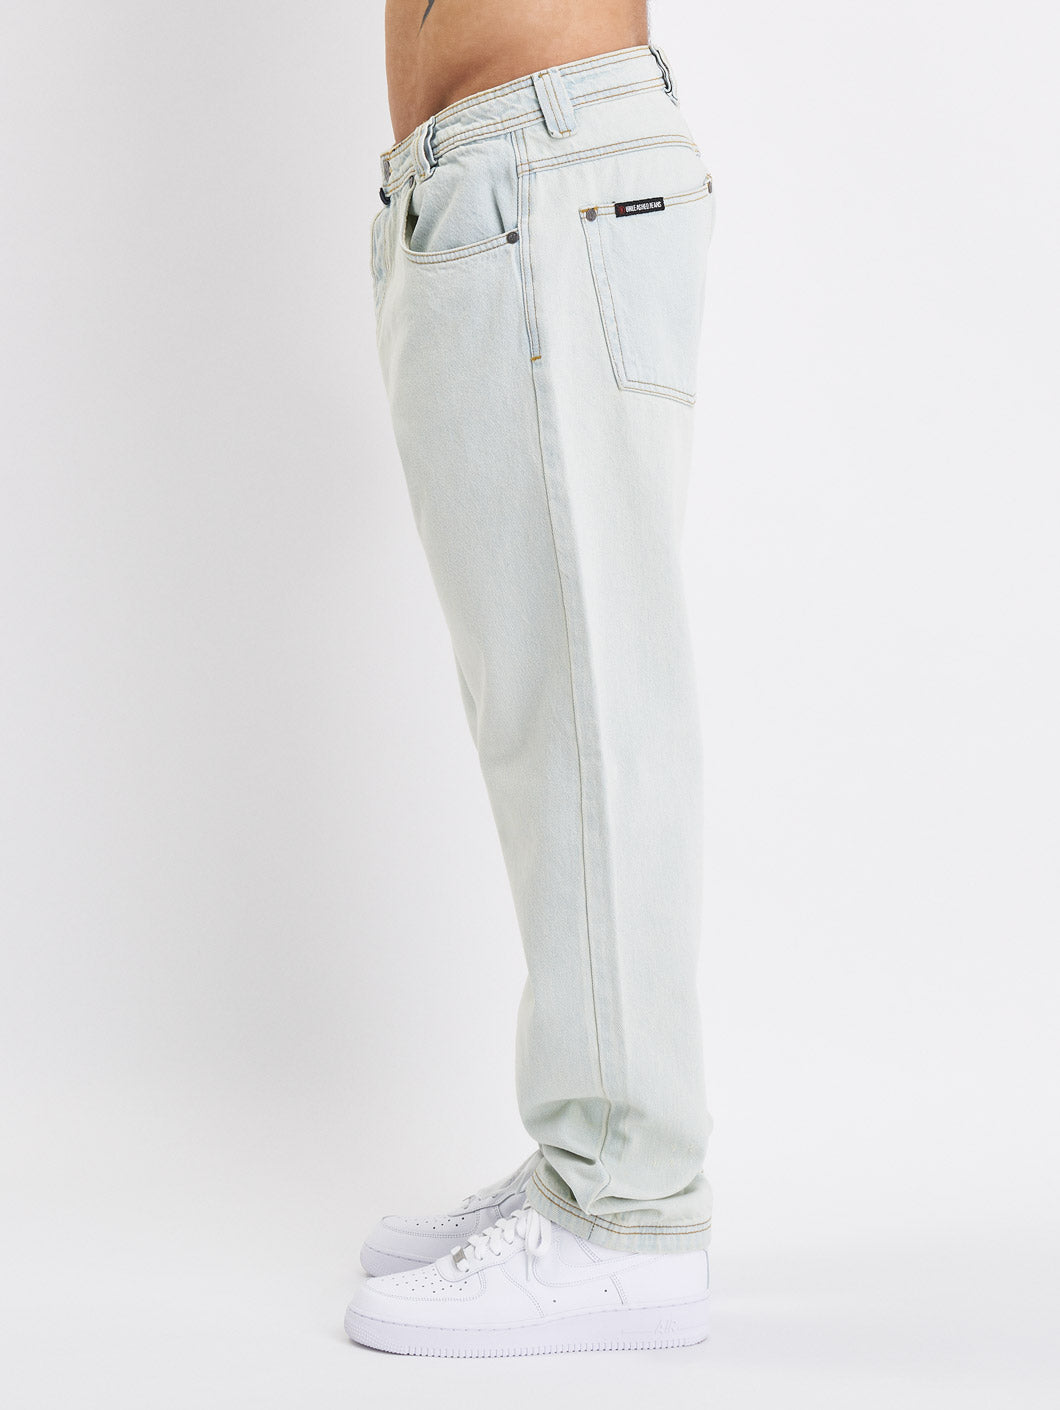 mox unleashed jeans lightblue - 7